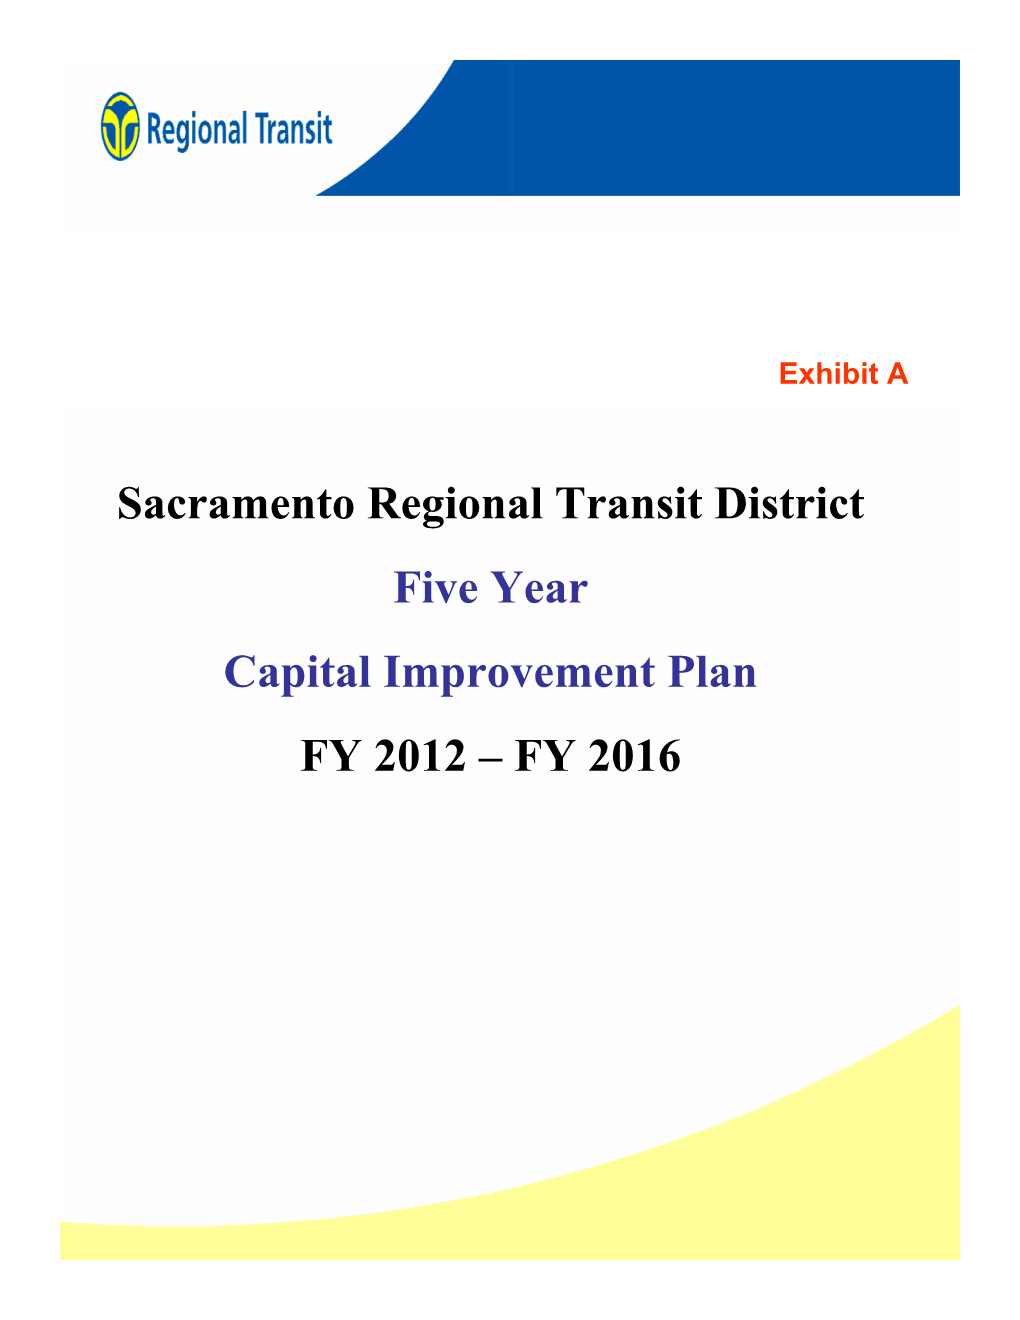 Sacramento Regional Transit District Five Year Capital Improvement Plan FY 2012 – FY 2016